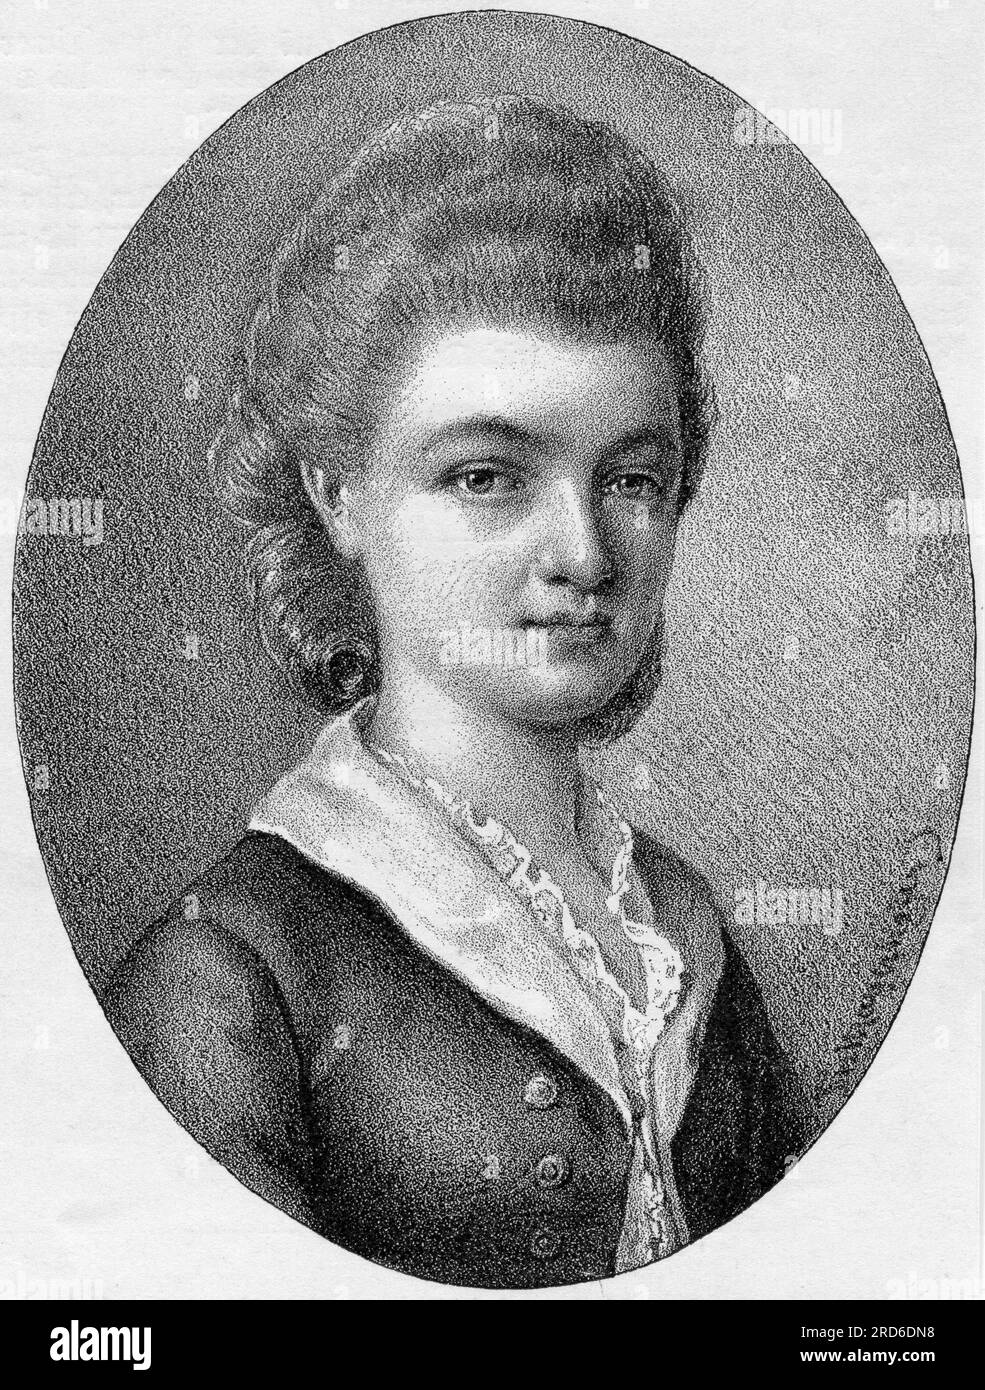 Wolzogen, Charlotte von, 16.4.1766 - 20.3.1794, German noble woman, unfortunate love of Friedrich Schiller, ARTIST'S COPYRIGHT HAS NOT TO BE CLEARED Stock Photo